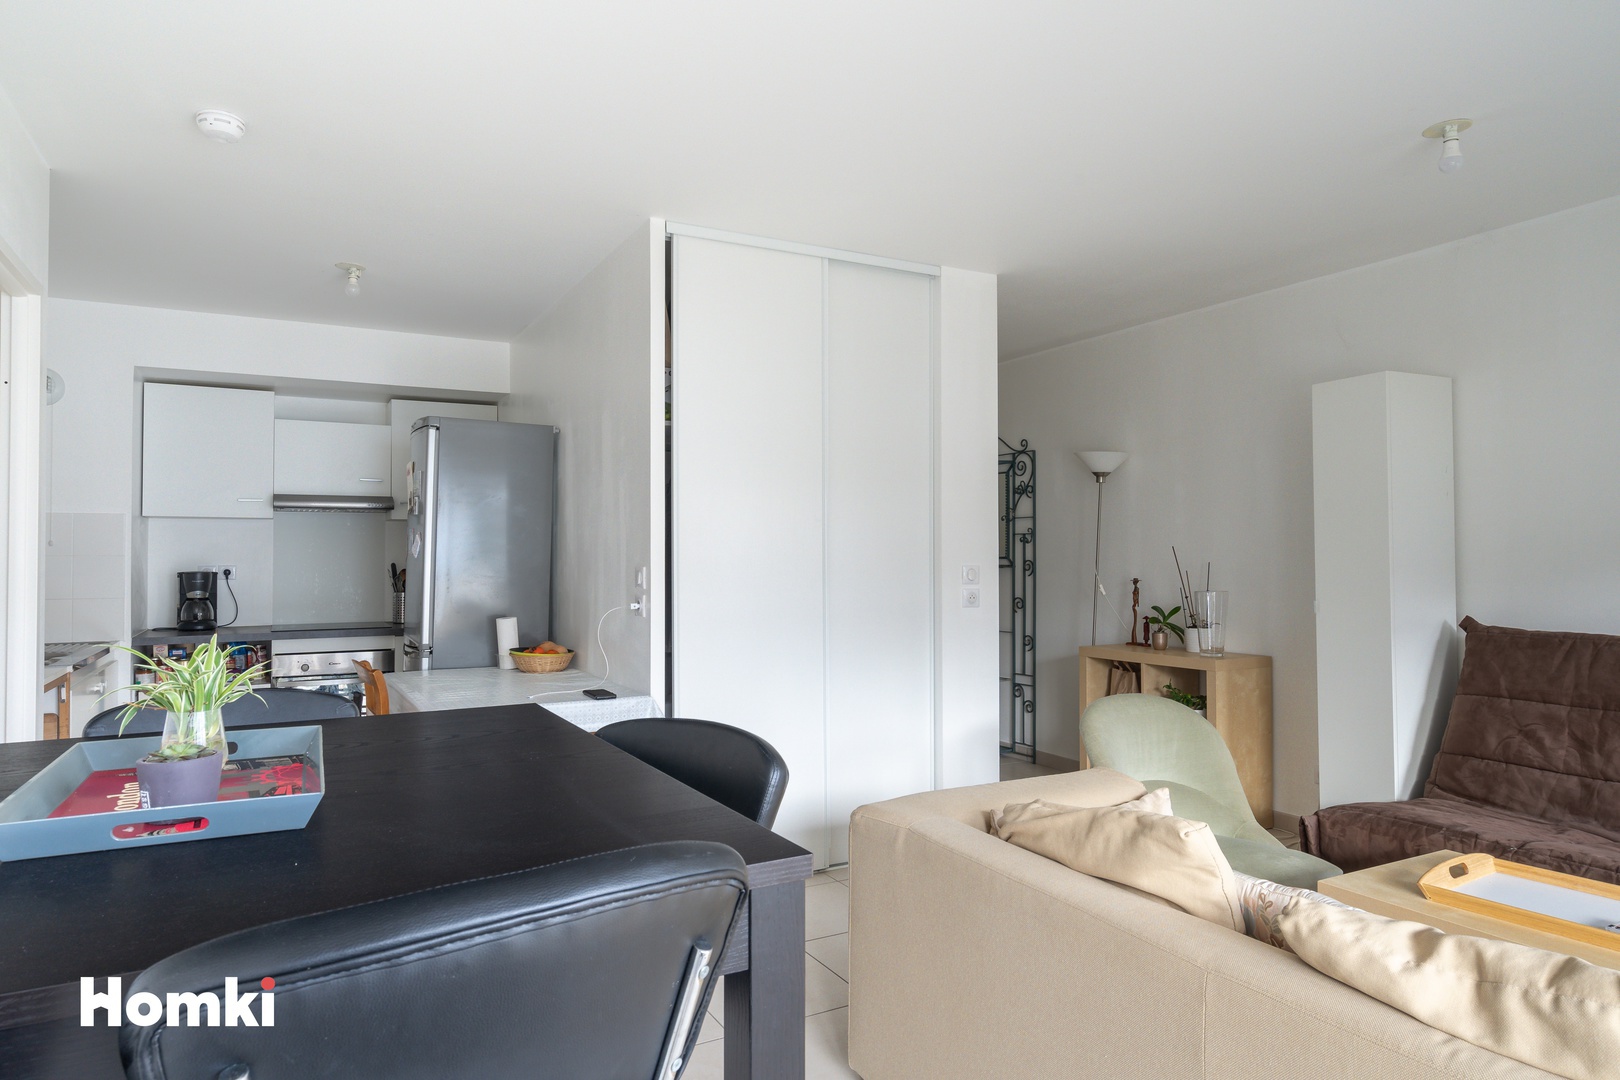 Homki - Vente Appartement  de 49.0 m² à Pessac 33600